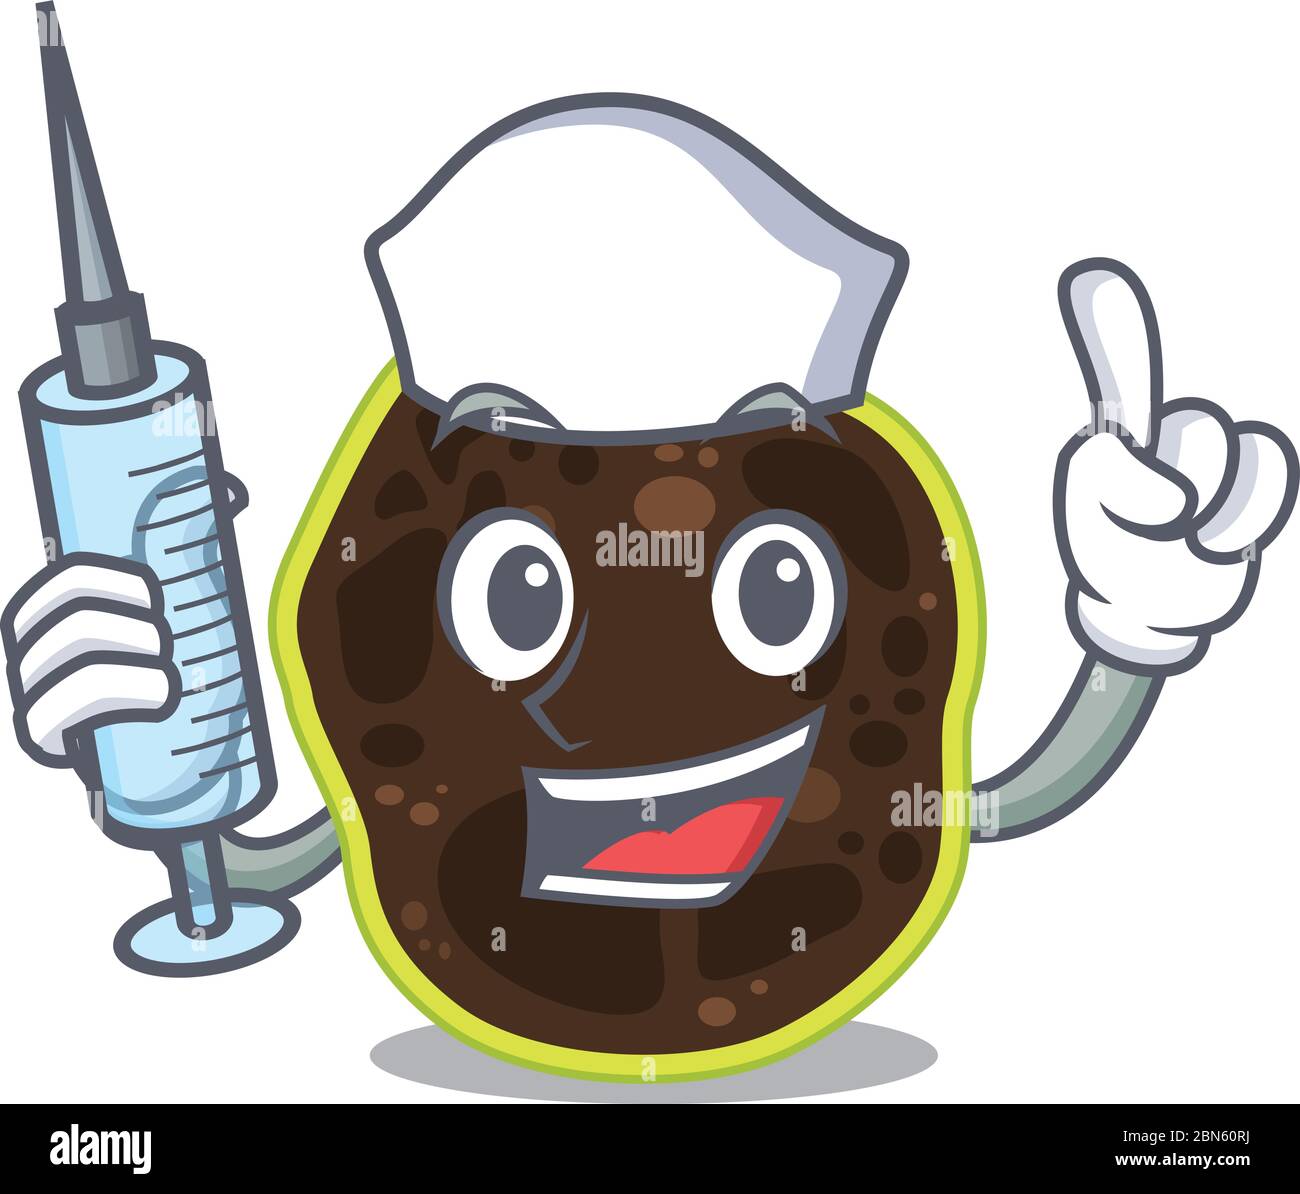 Firmicutes humble nurse mascot design with a syringe Stock Vector